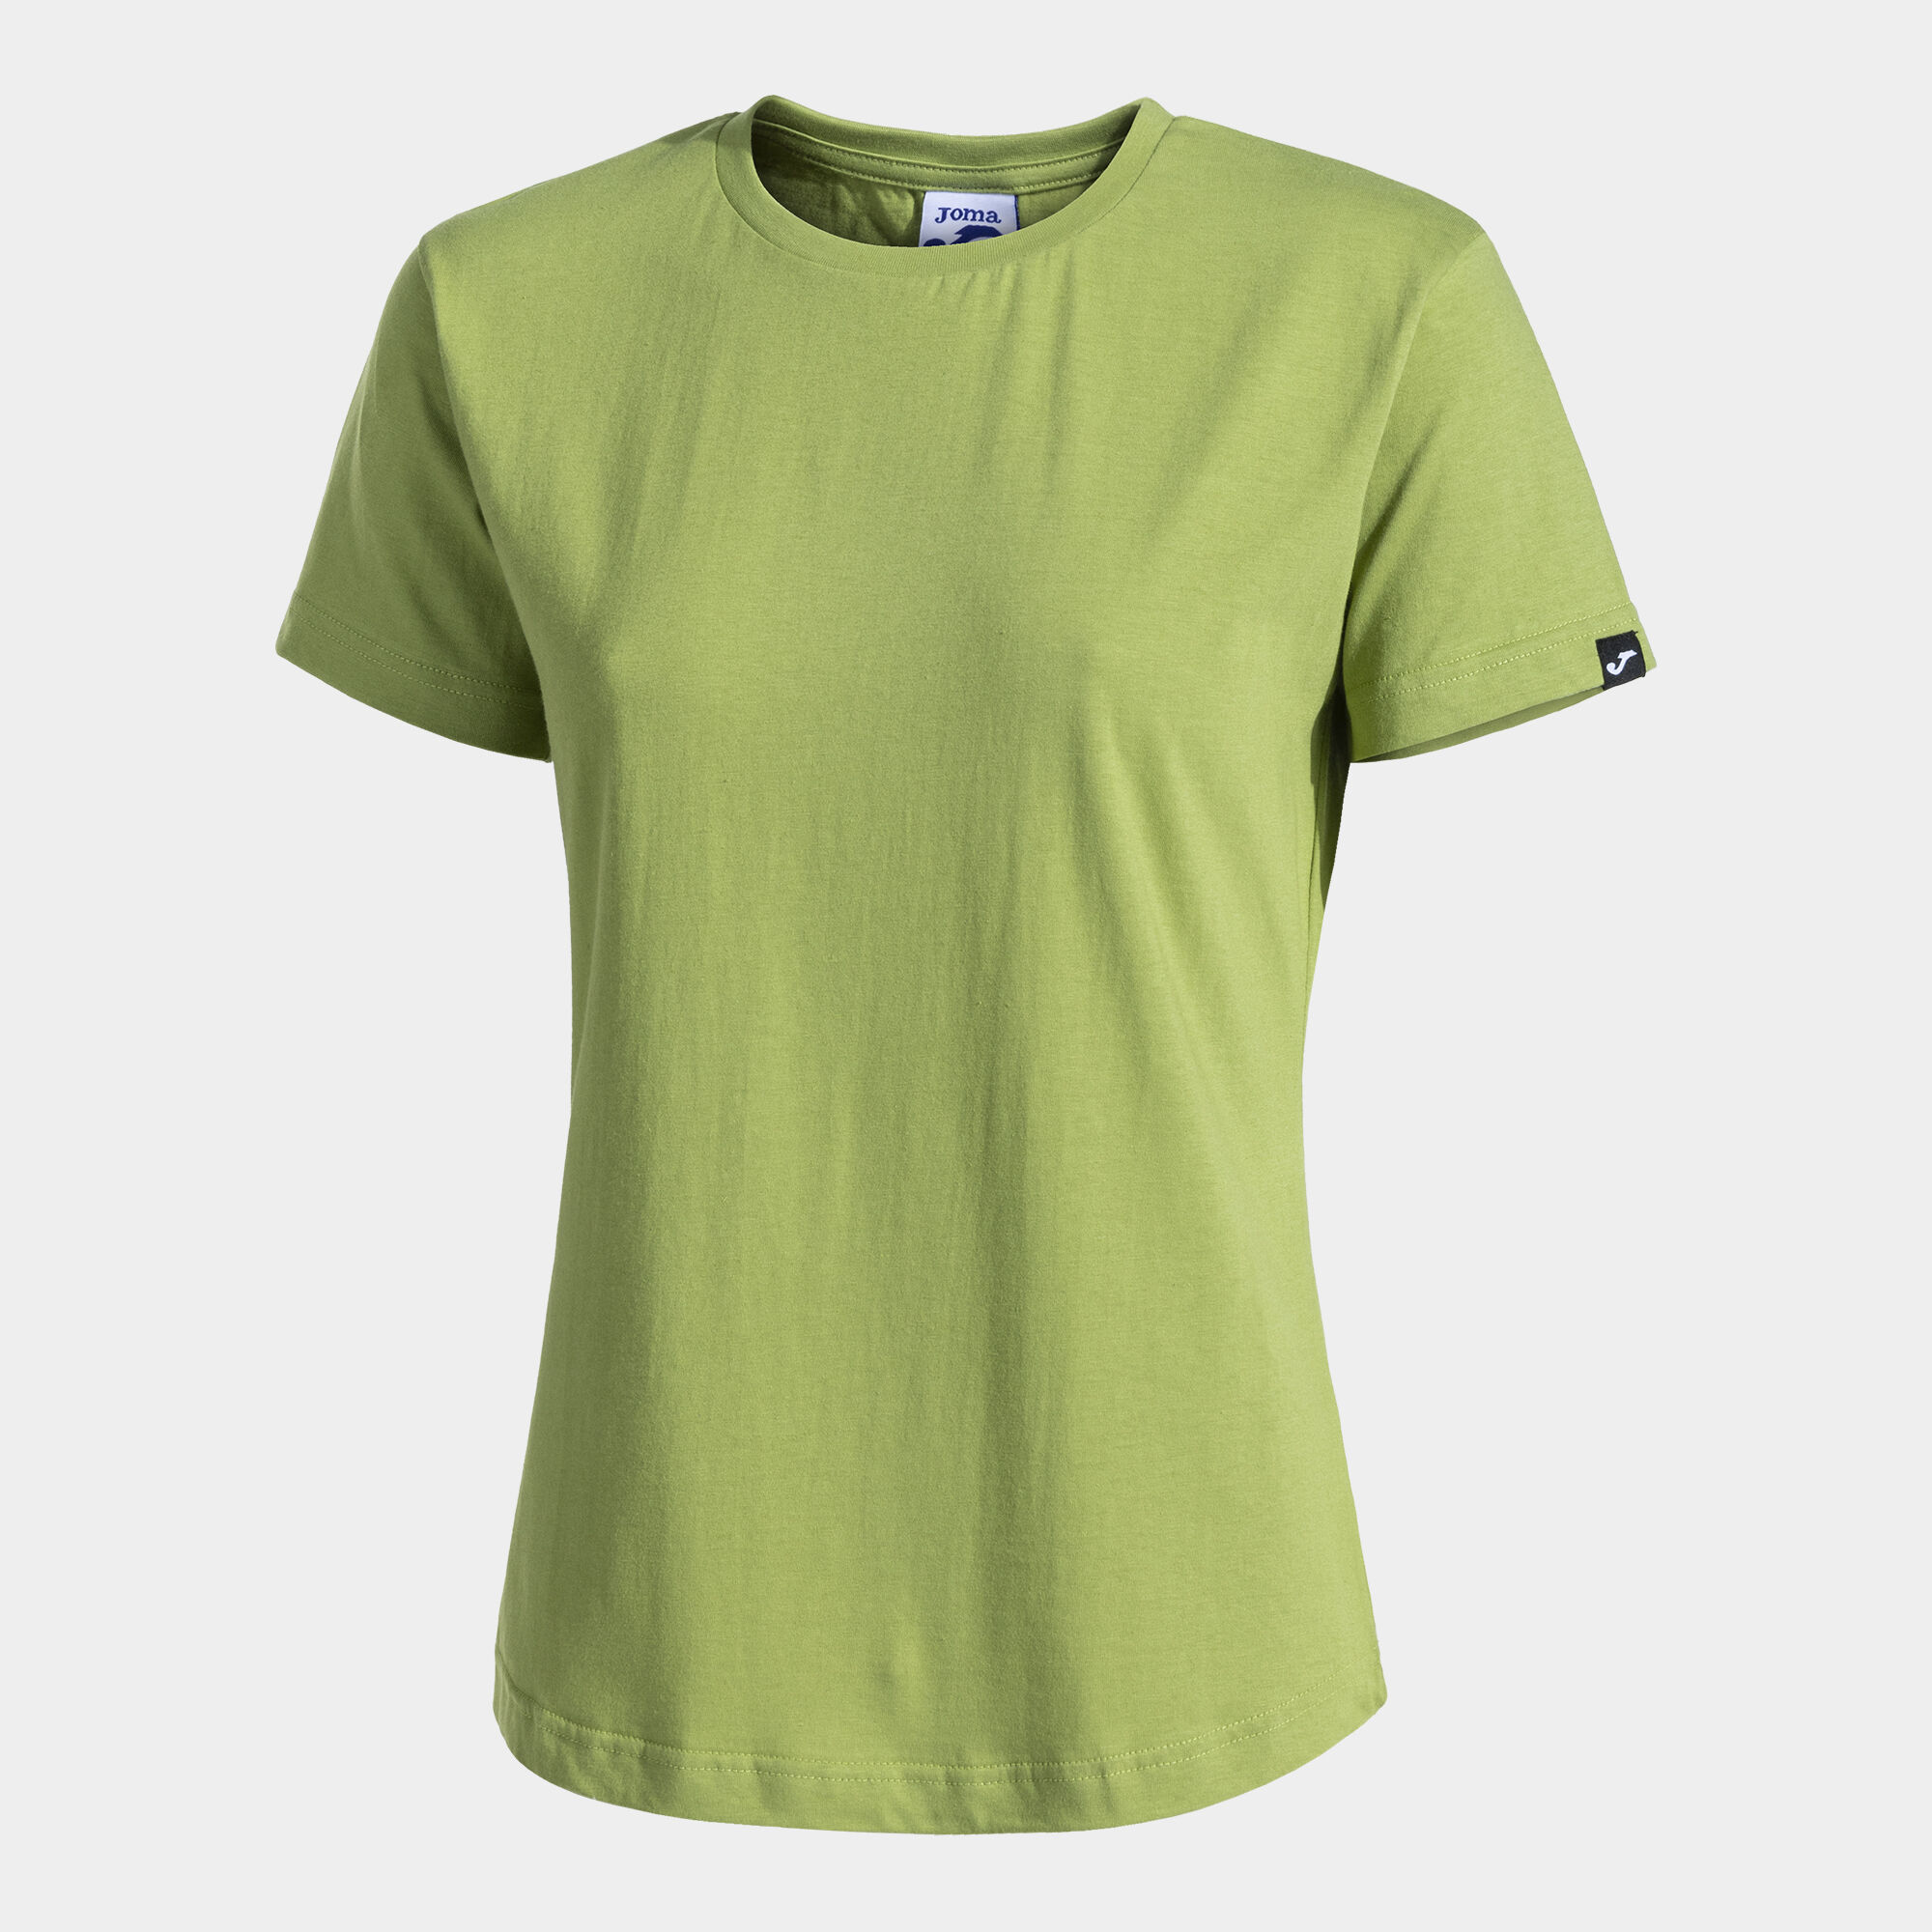 Shirt short sleeve woman Desert khaki